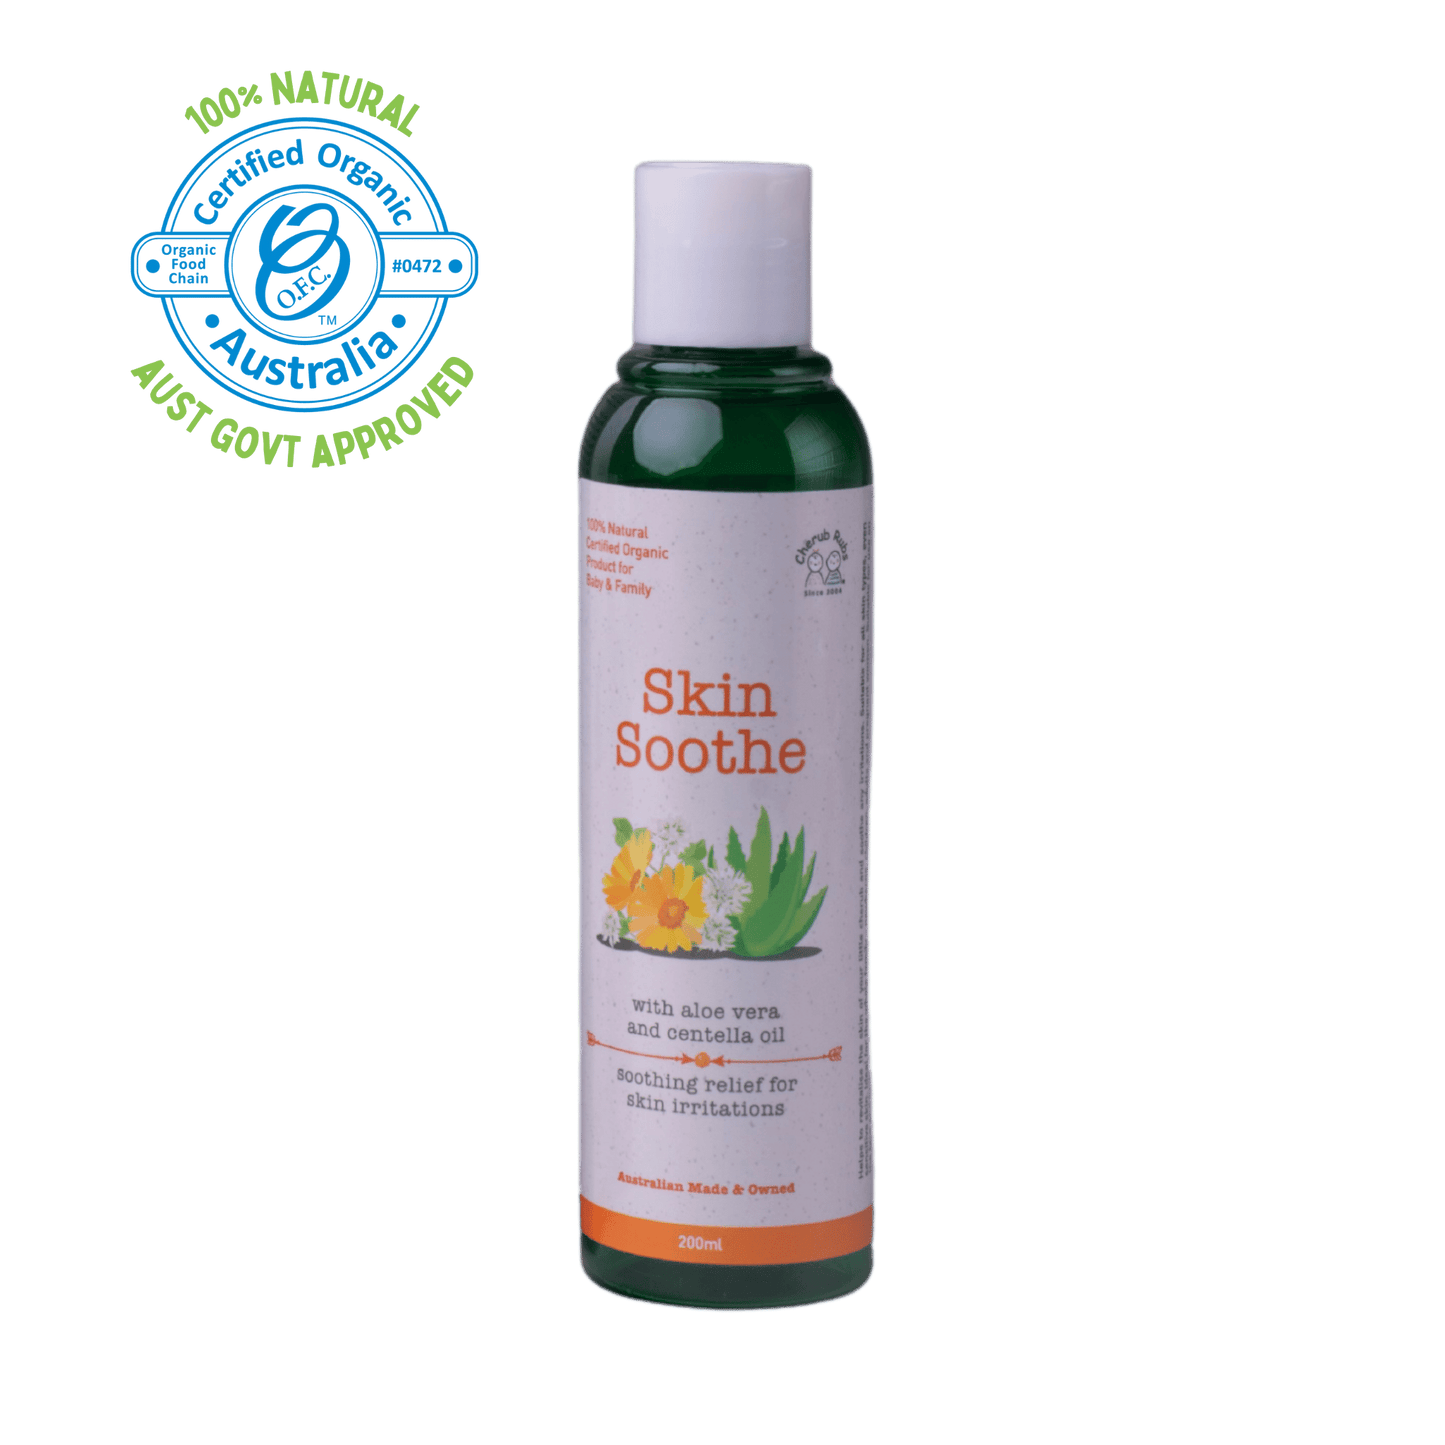 certified-organic-skin-soothe-200ml-skincare